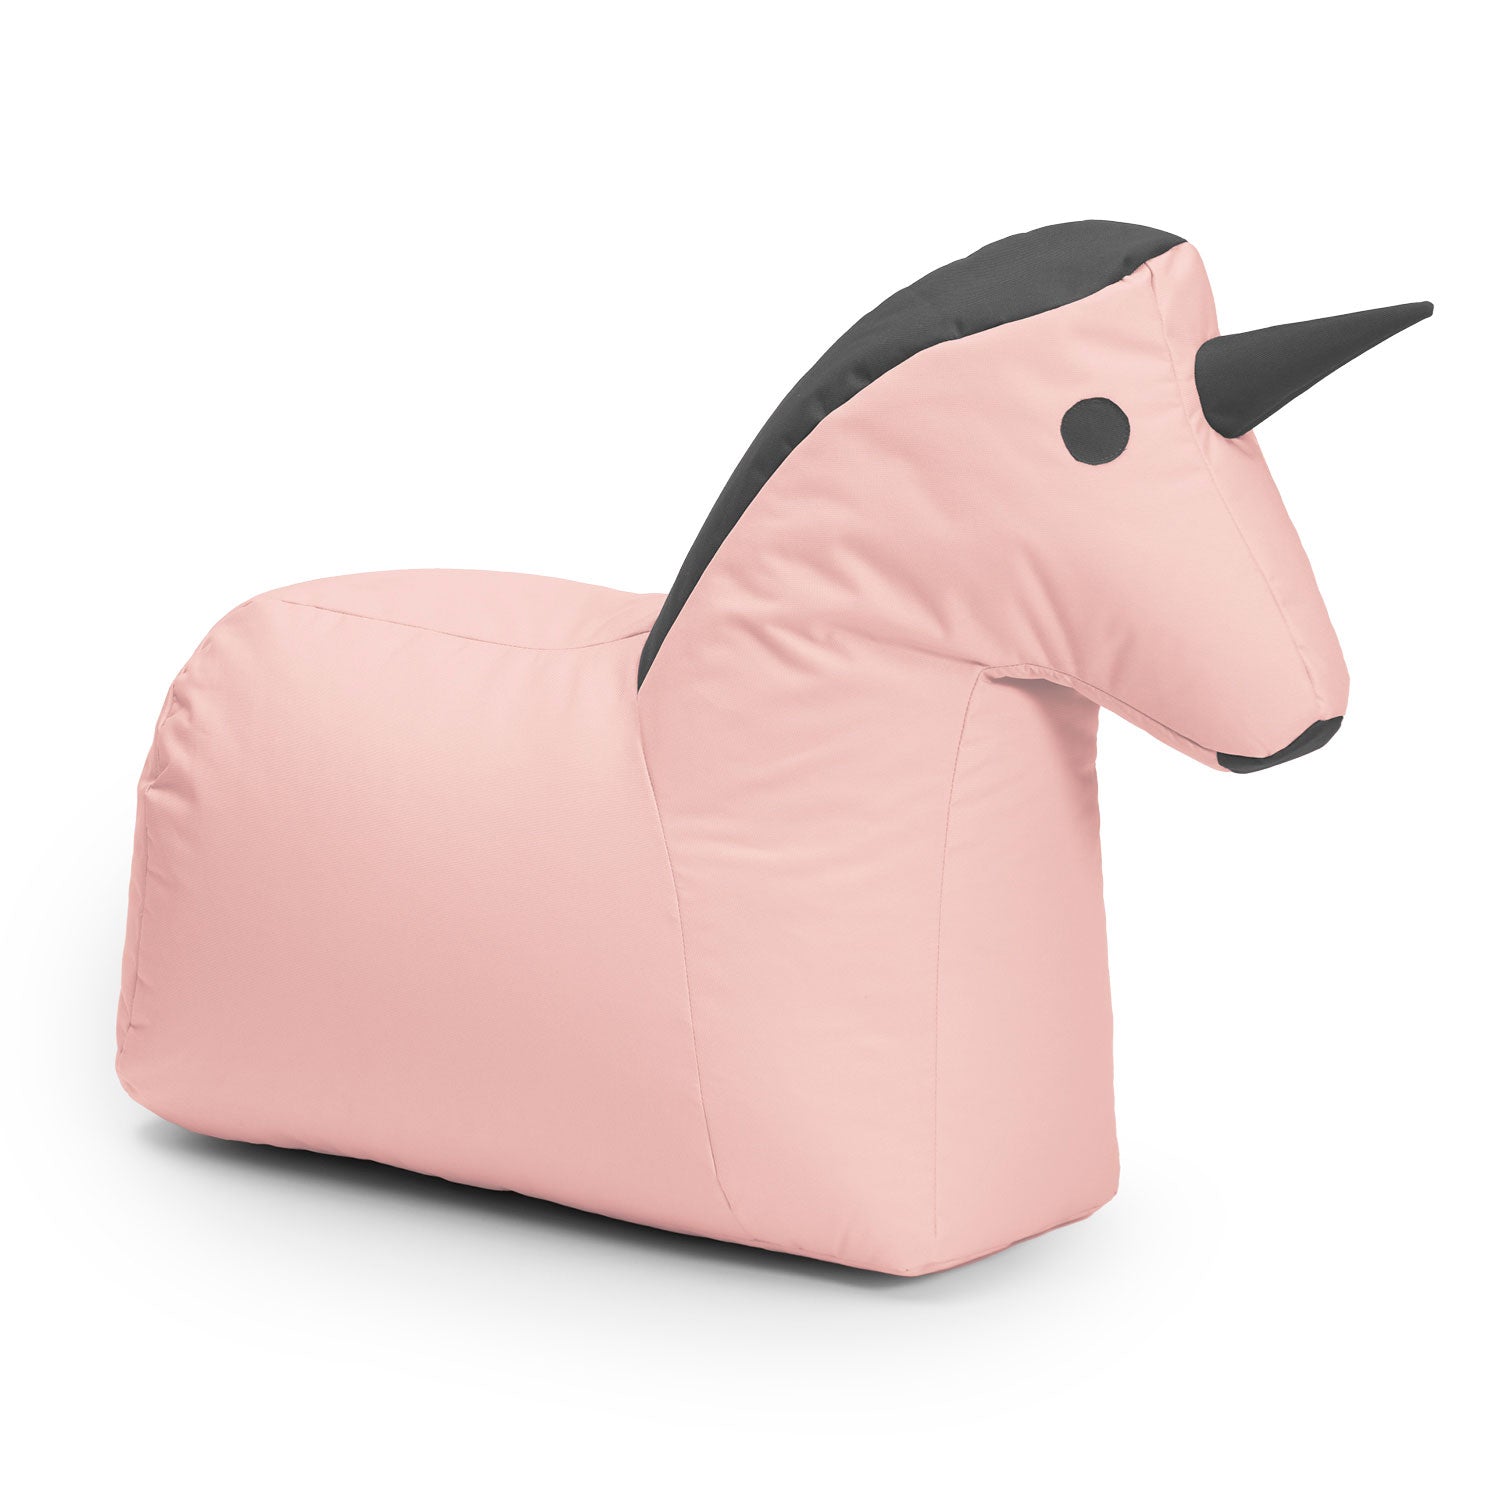 LUMALAND Kindersitzsack Animal Line Einhorn - Pastell Pink/Stahlgrau von LUMALAND